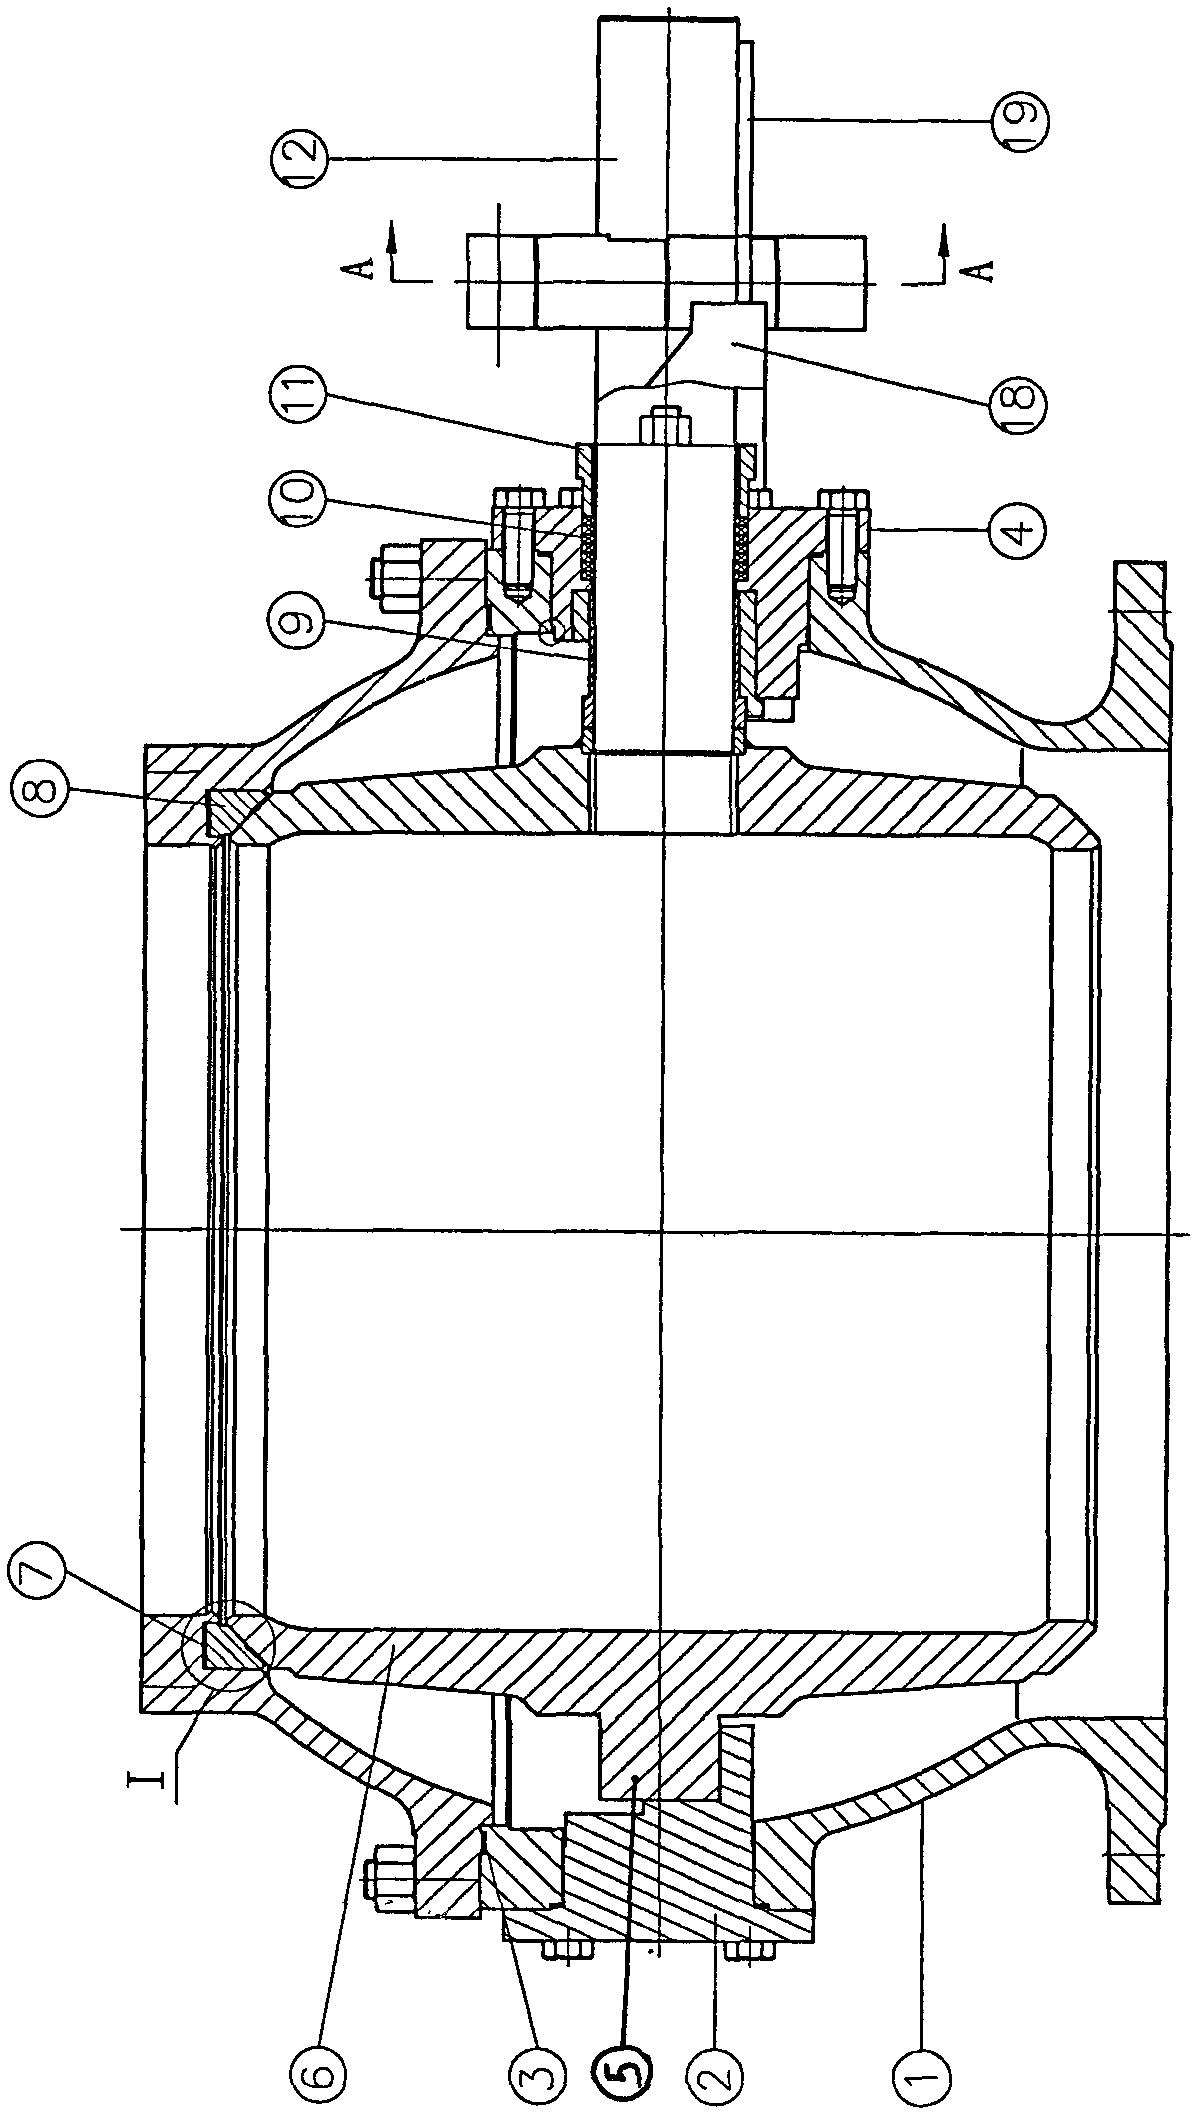 Overhead valve of pulp digester